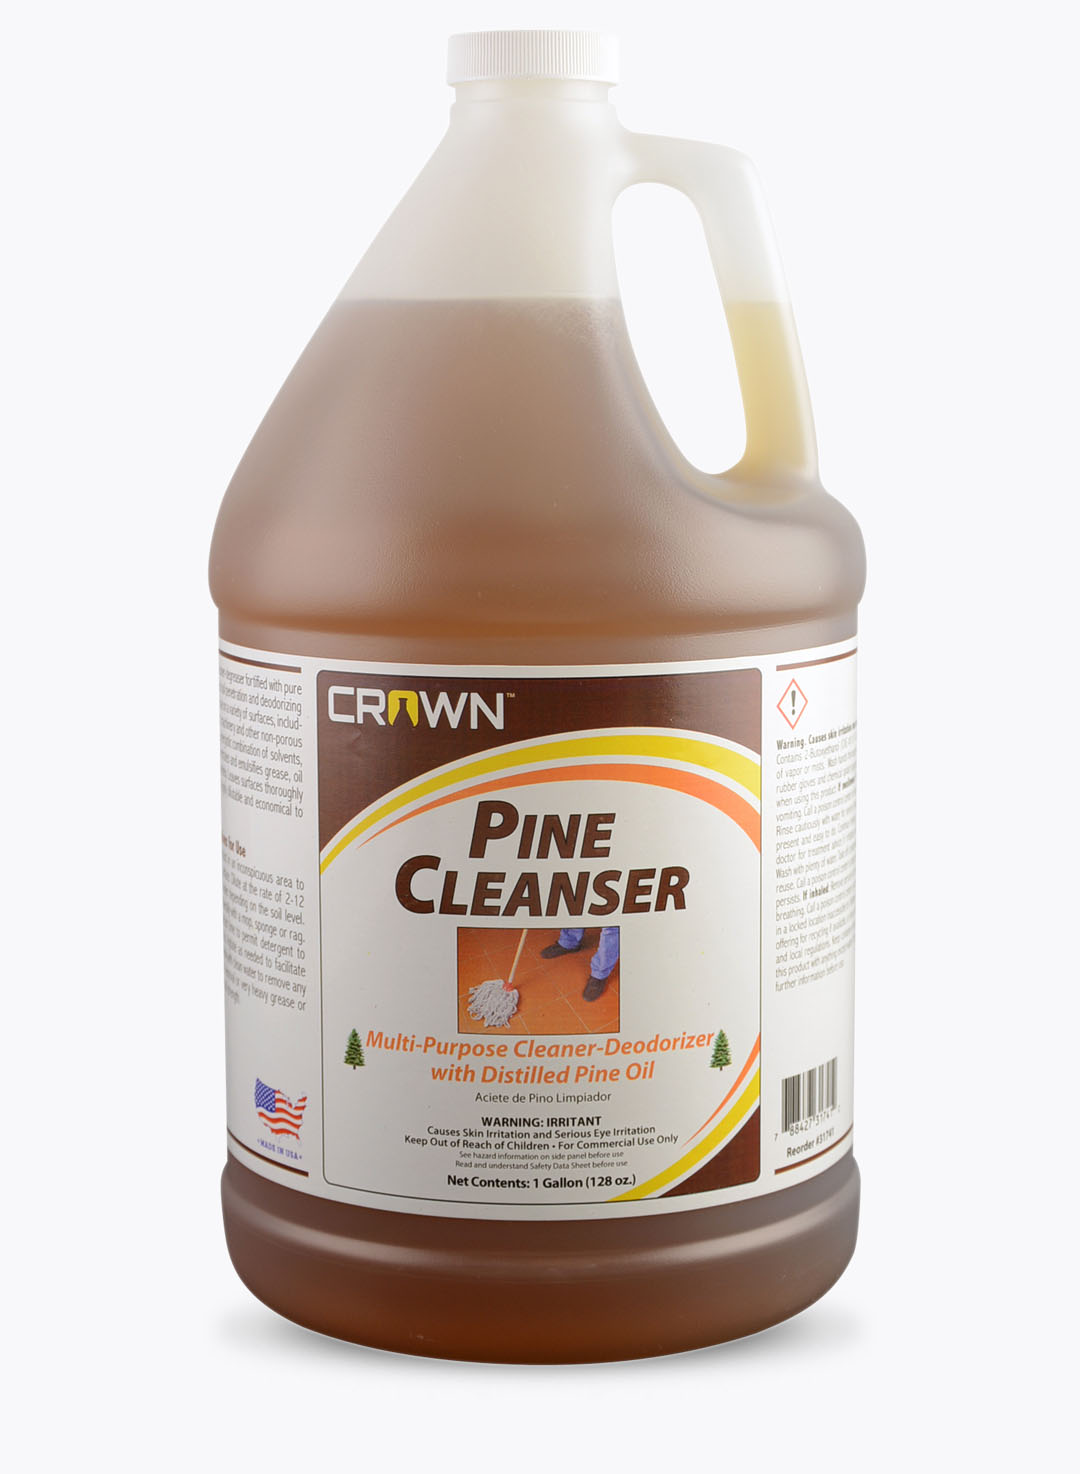 Pine Cleanser